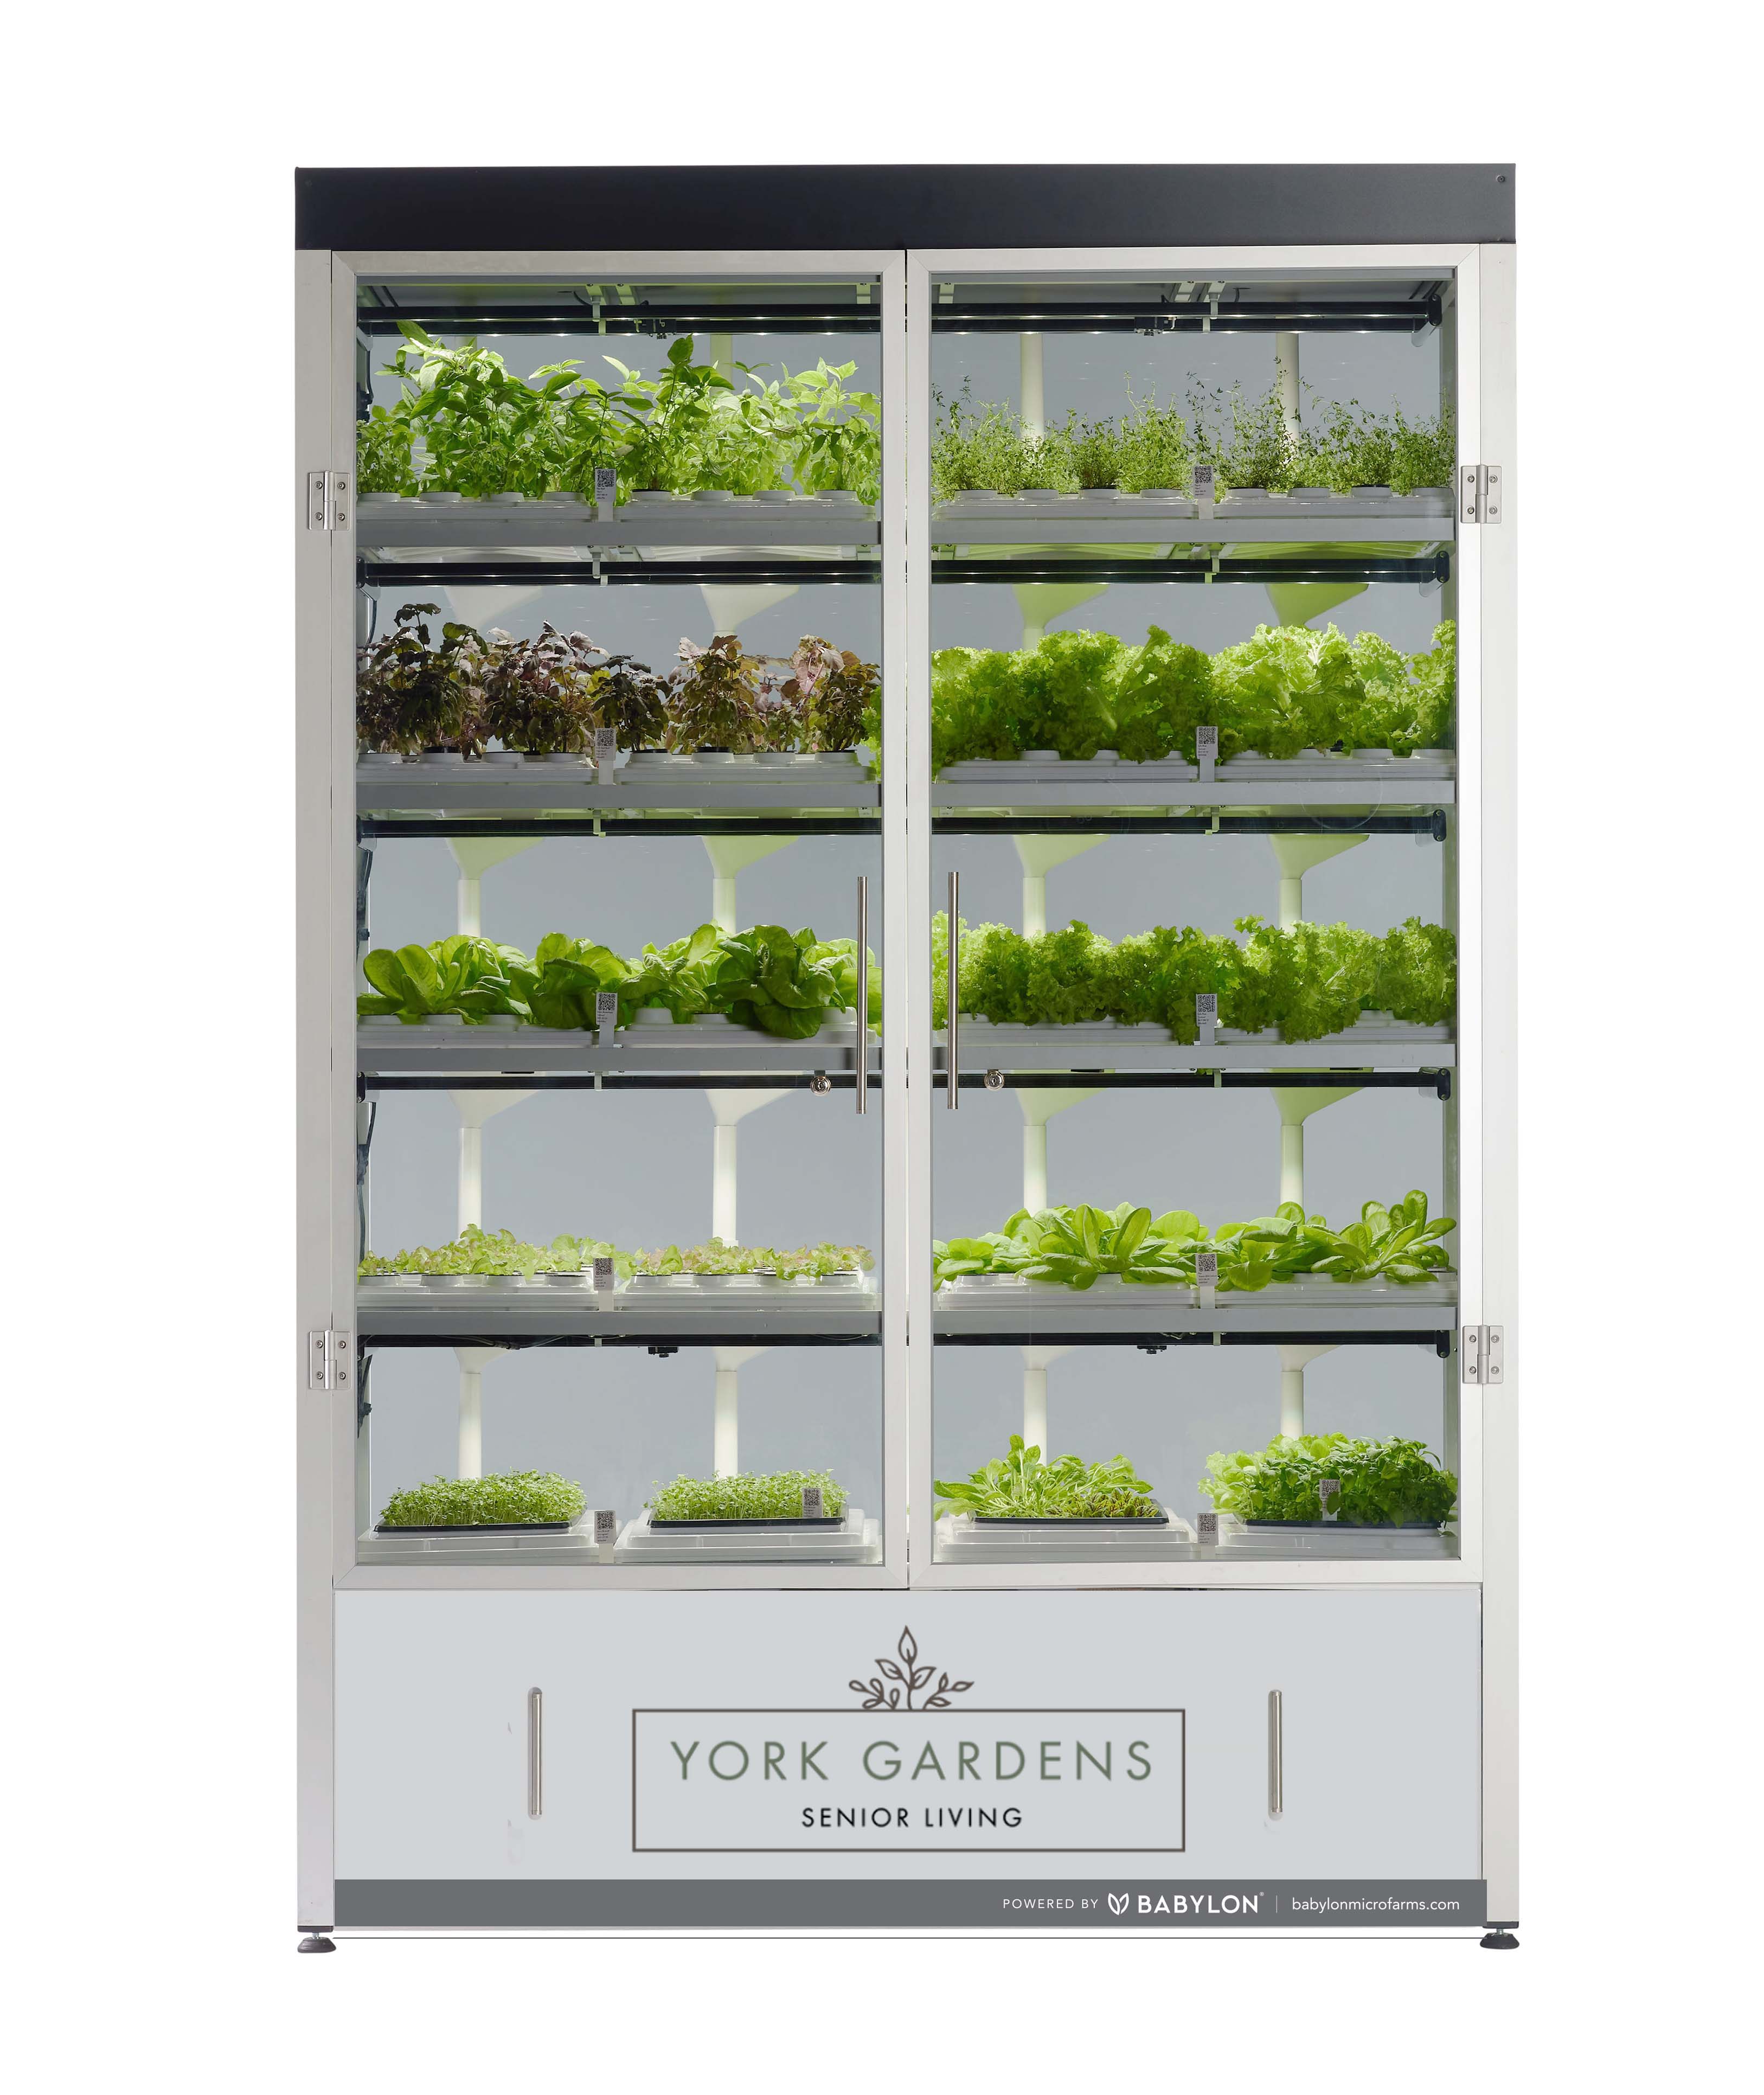 Salad greens grown indoors